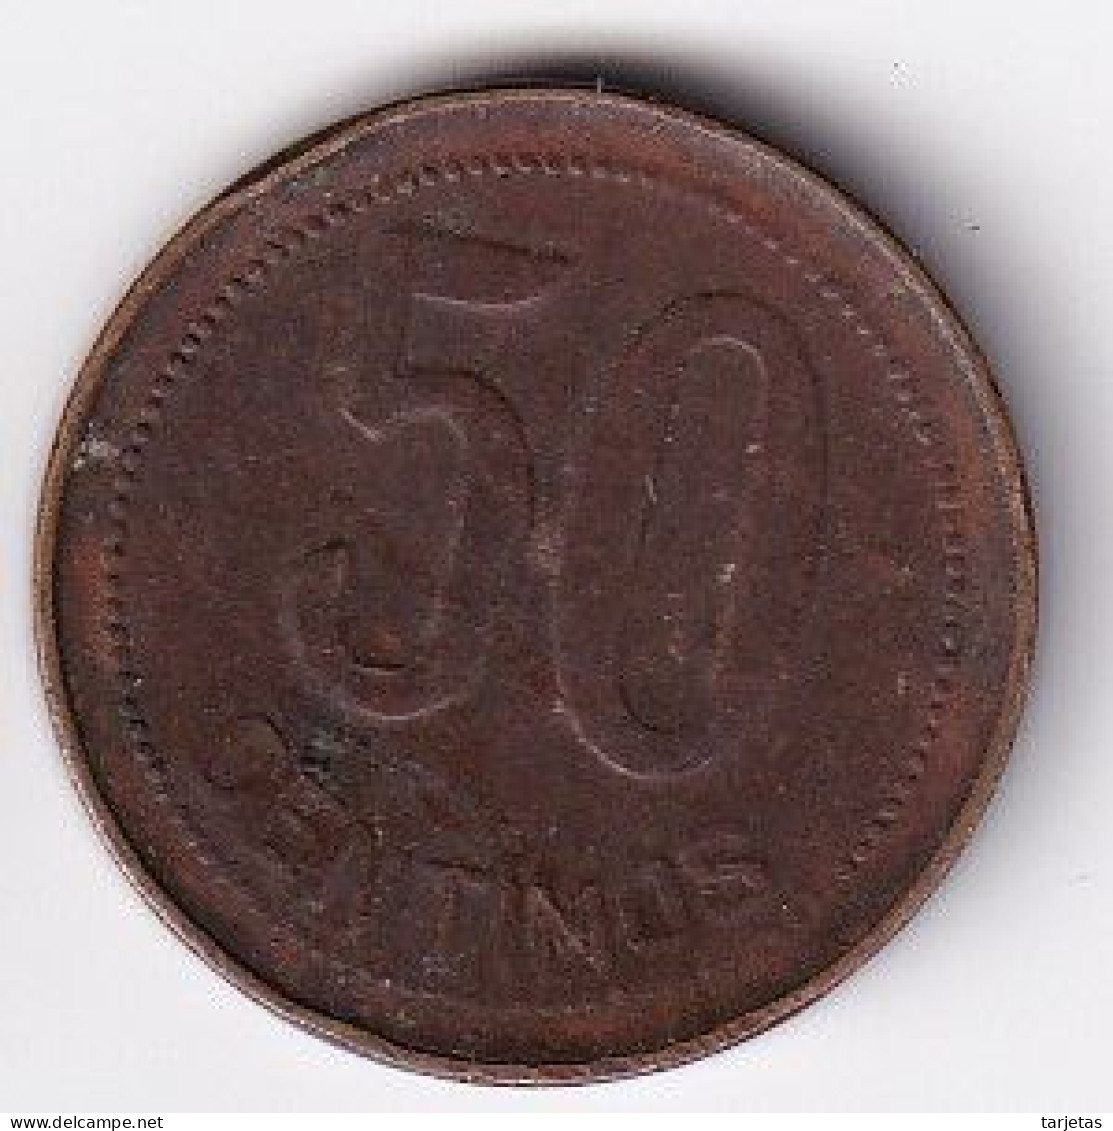 MONEDA DE ESPAÑA DE 50 CENTIMOS DEL AÑO 1937 (COIN) REPUBLICA ESPAÑOLA - 50 Centesimi